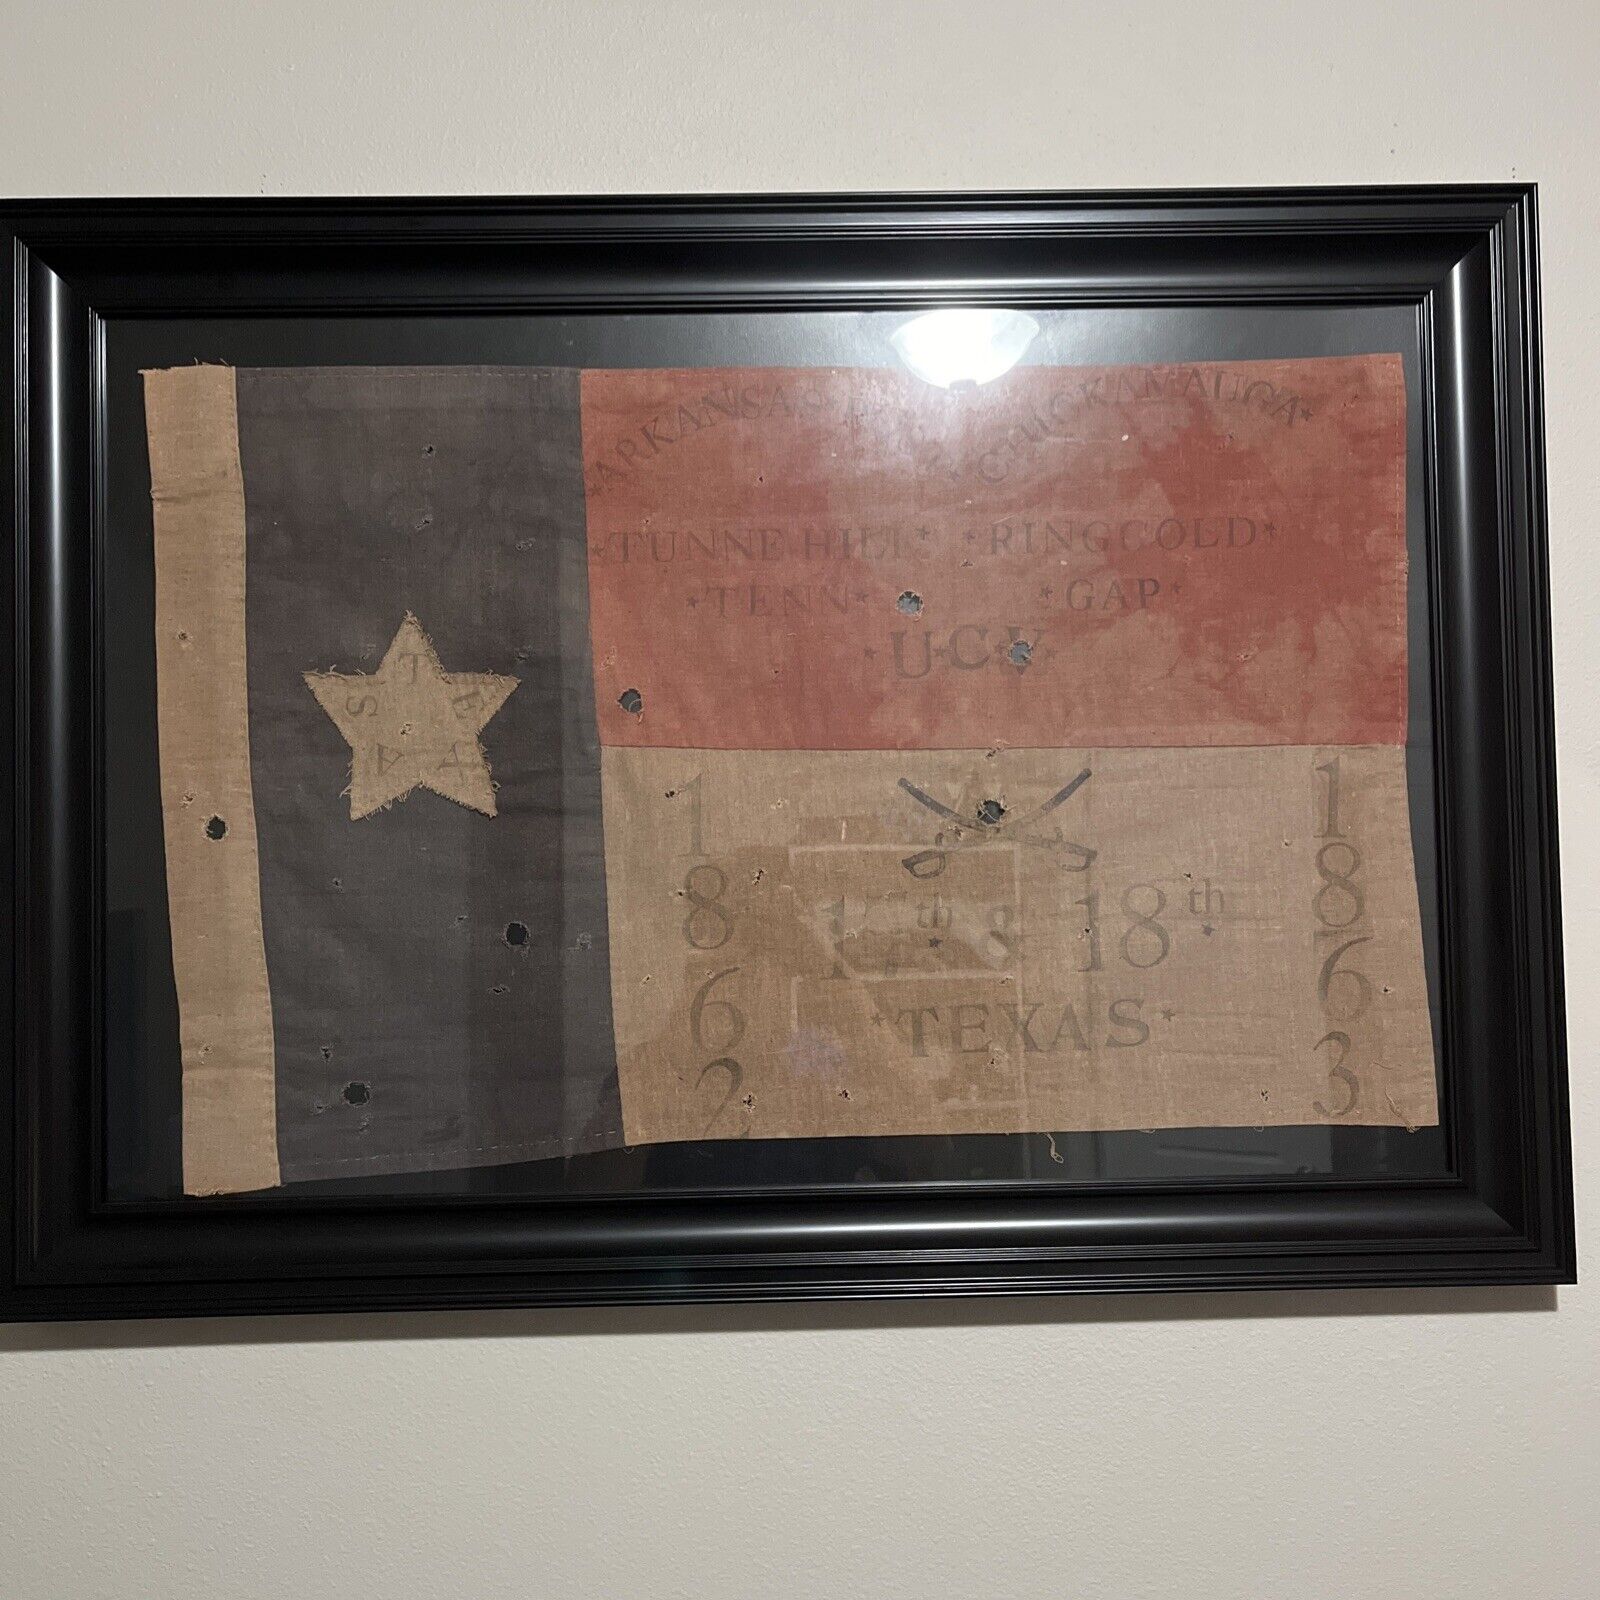 UCV BATTLE FLAG TEXAS 17th And 18th Texas Cavalry Granbury’s Brigade 1898 U.C.V.